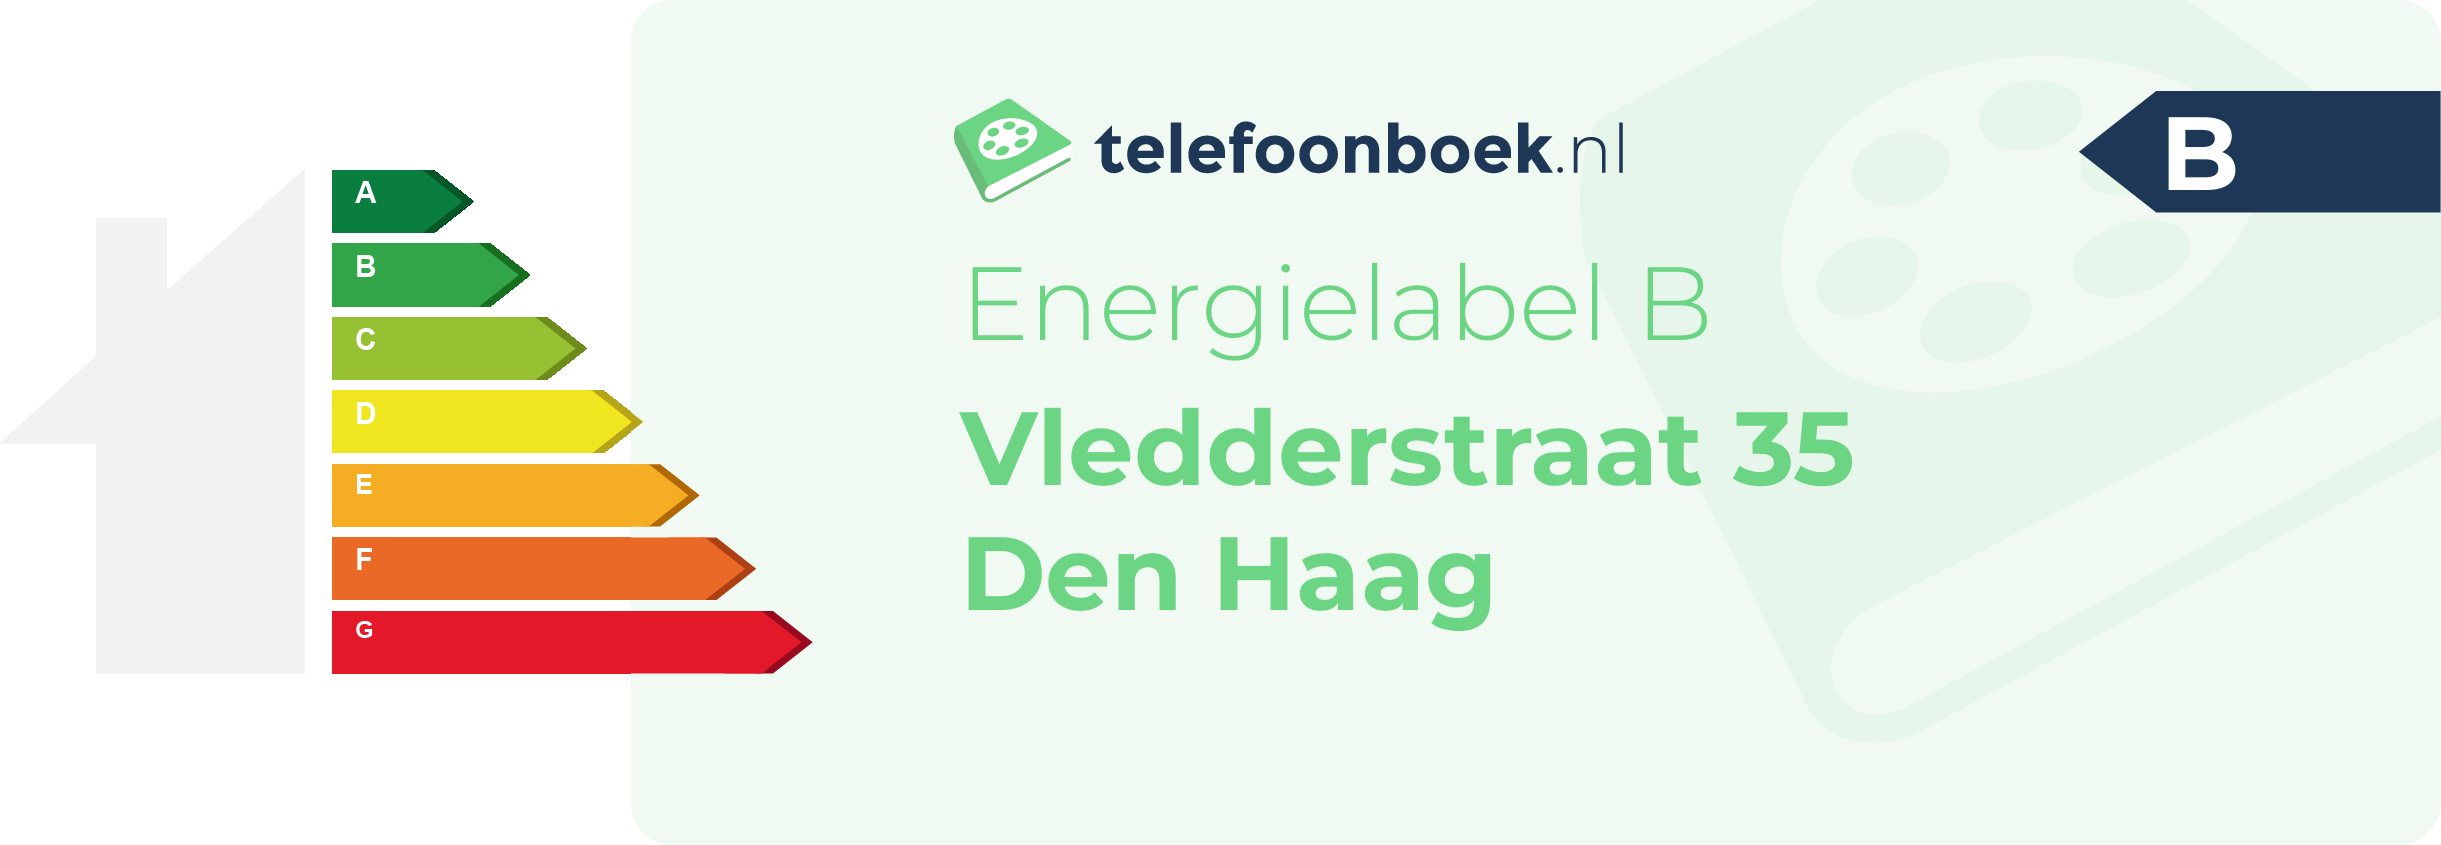 Energielabel Vledderstraat 35 Den Haag